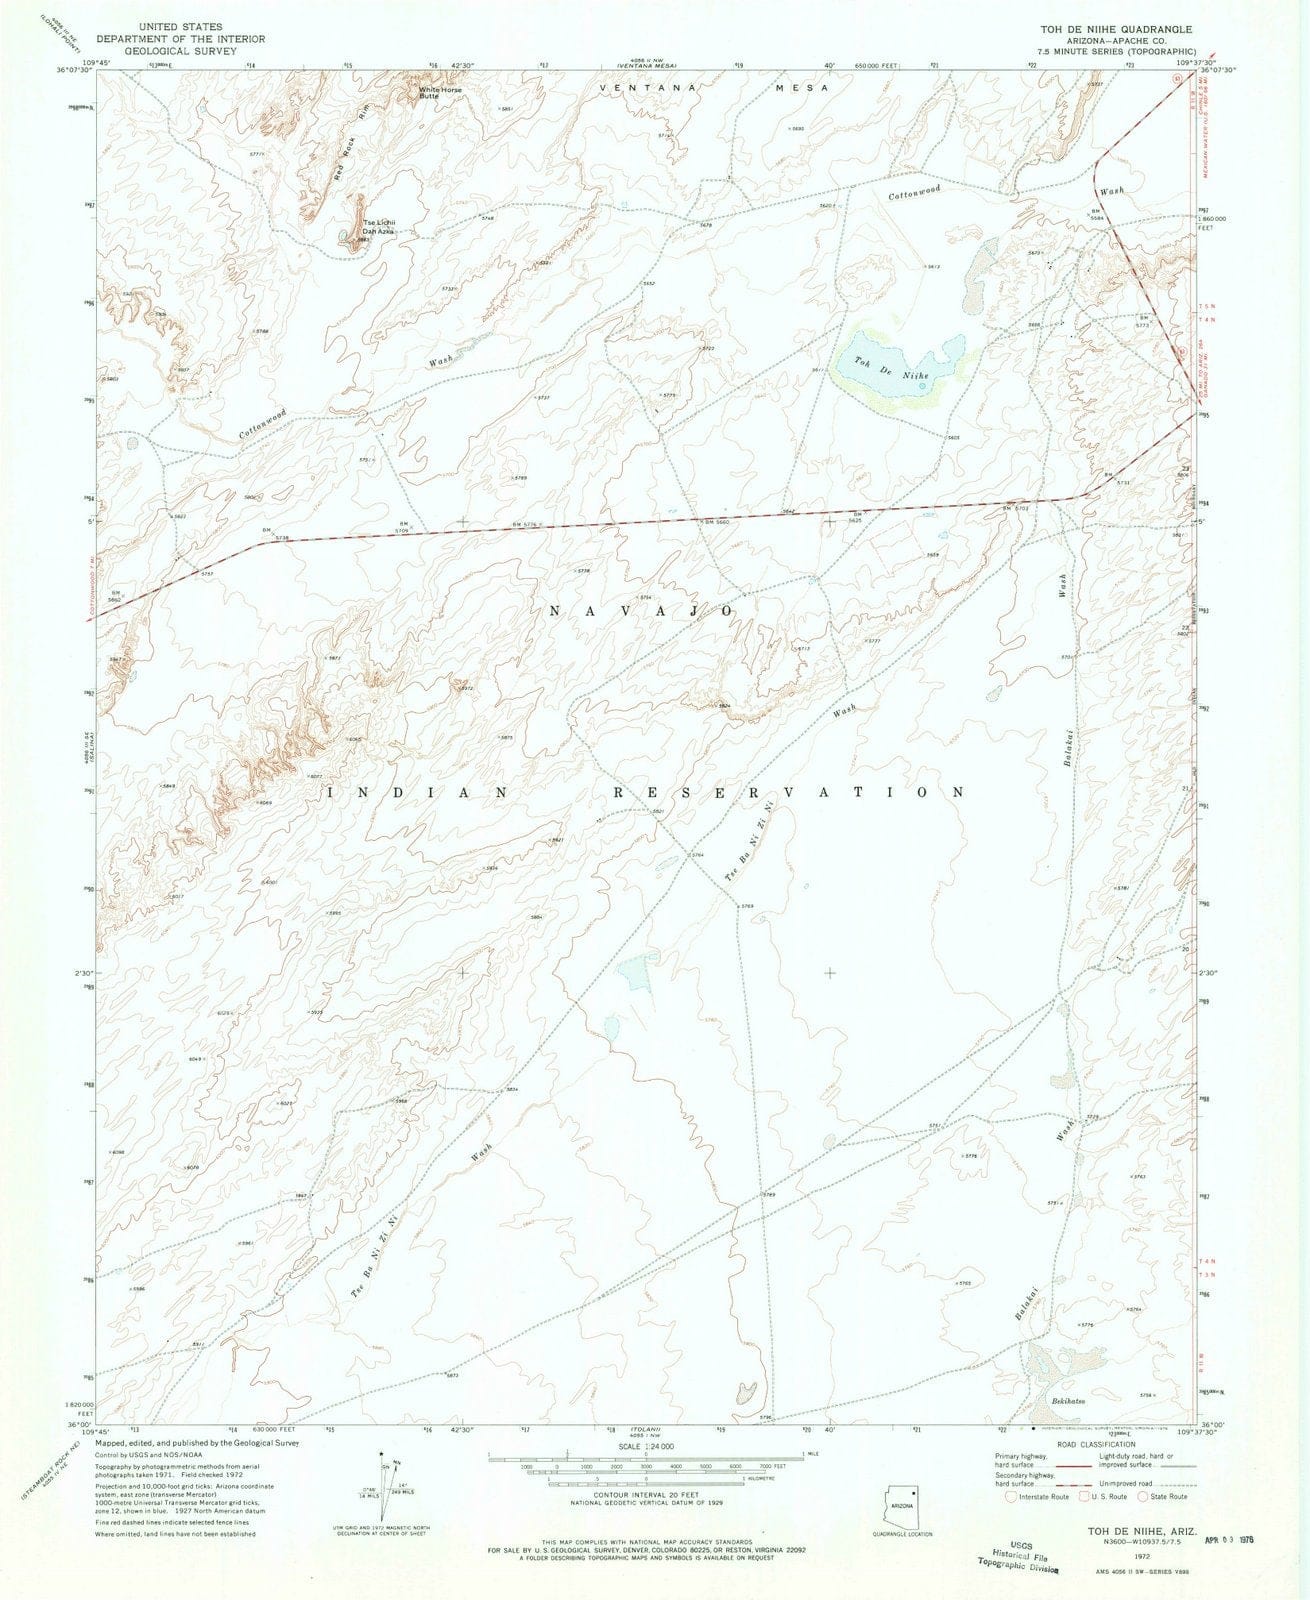 1972 Tohe Niihe, AZ - Arizona - USGS Topographic Map